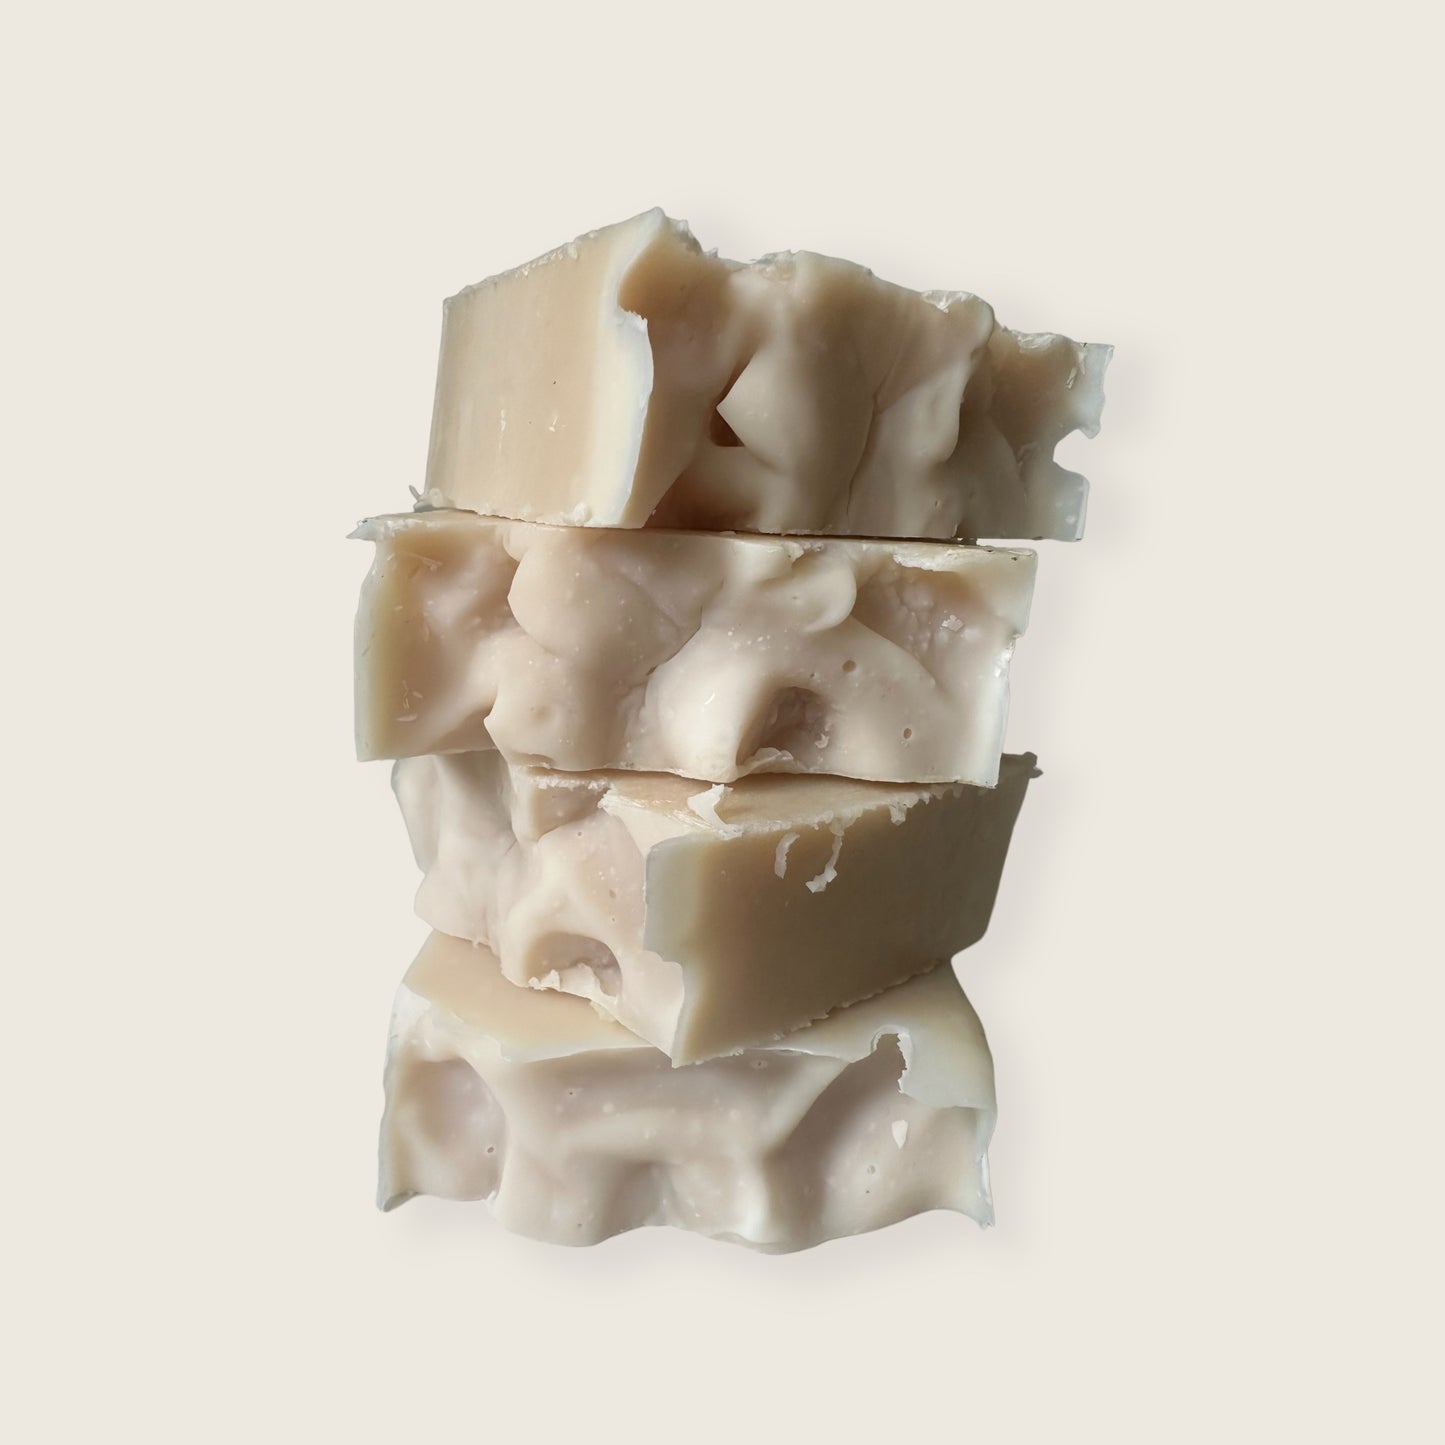 Buttermilk Soap